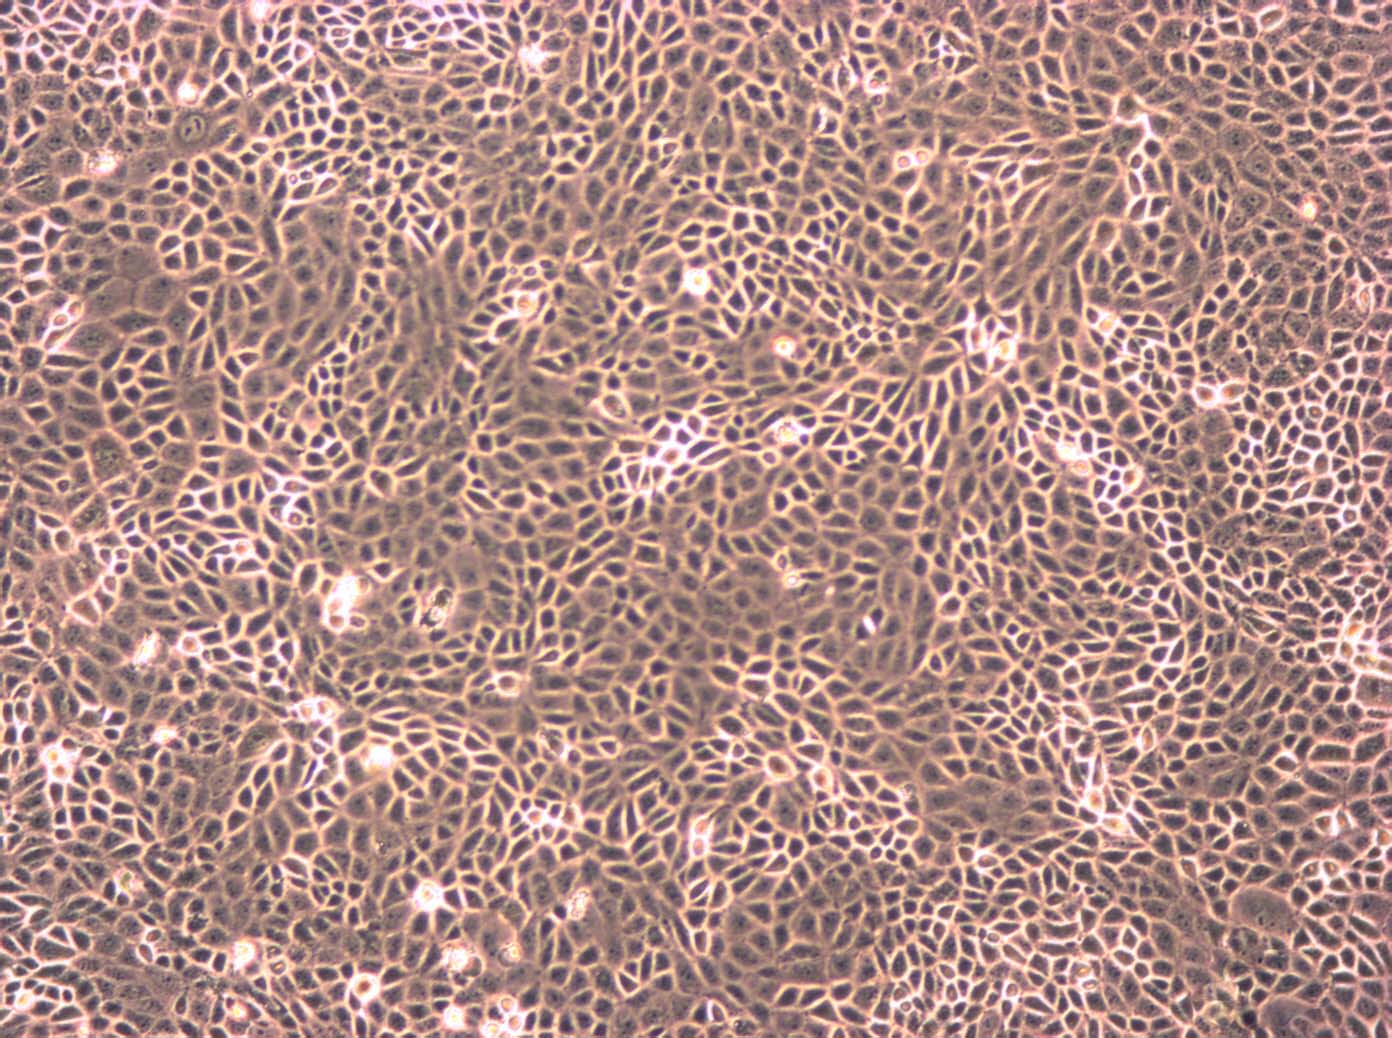 CHP-212 epithelioid cells人脑神经母细胞瘤细胞系,CHP-212 epithelioid cells